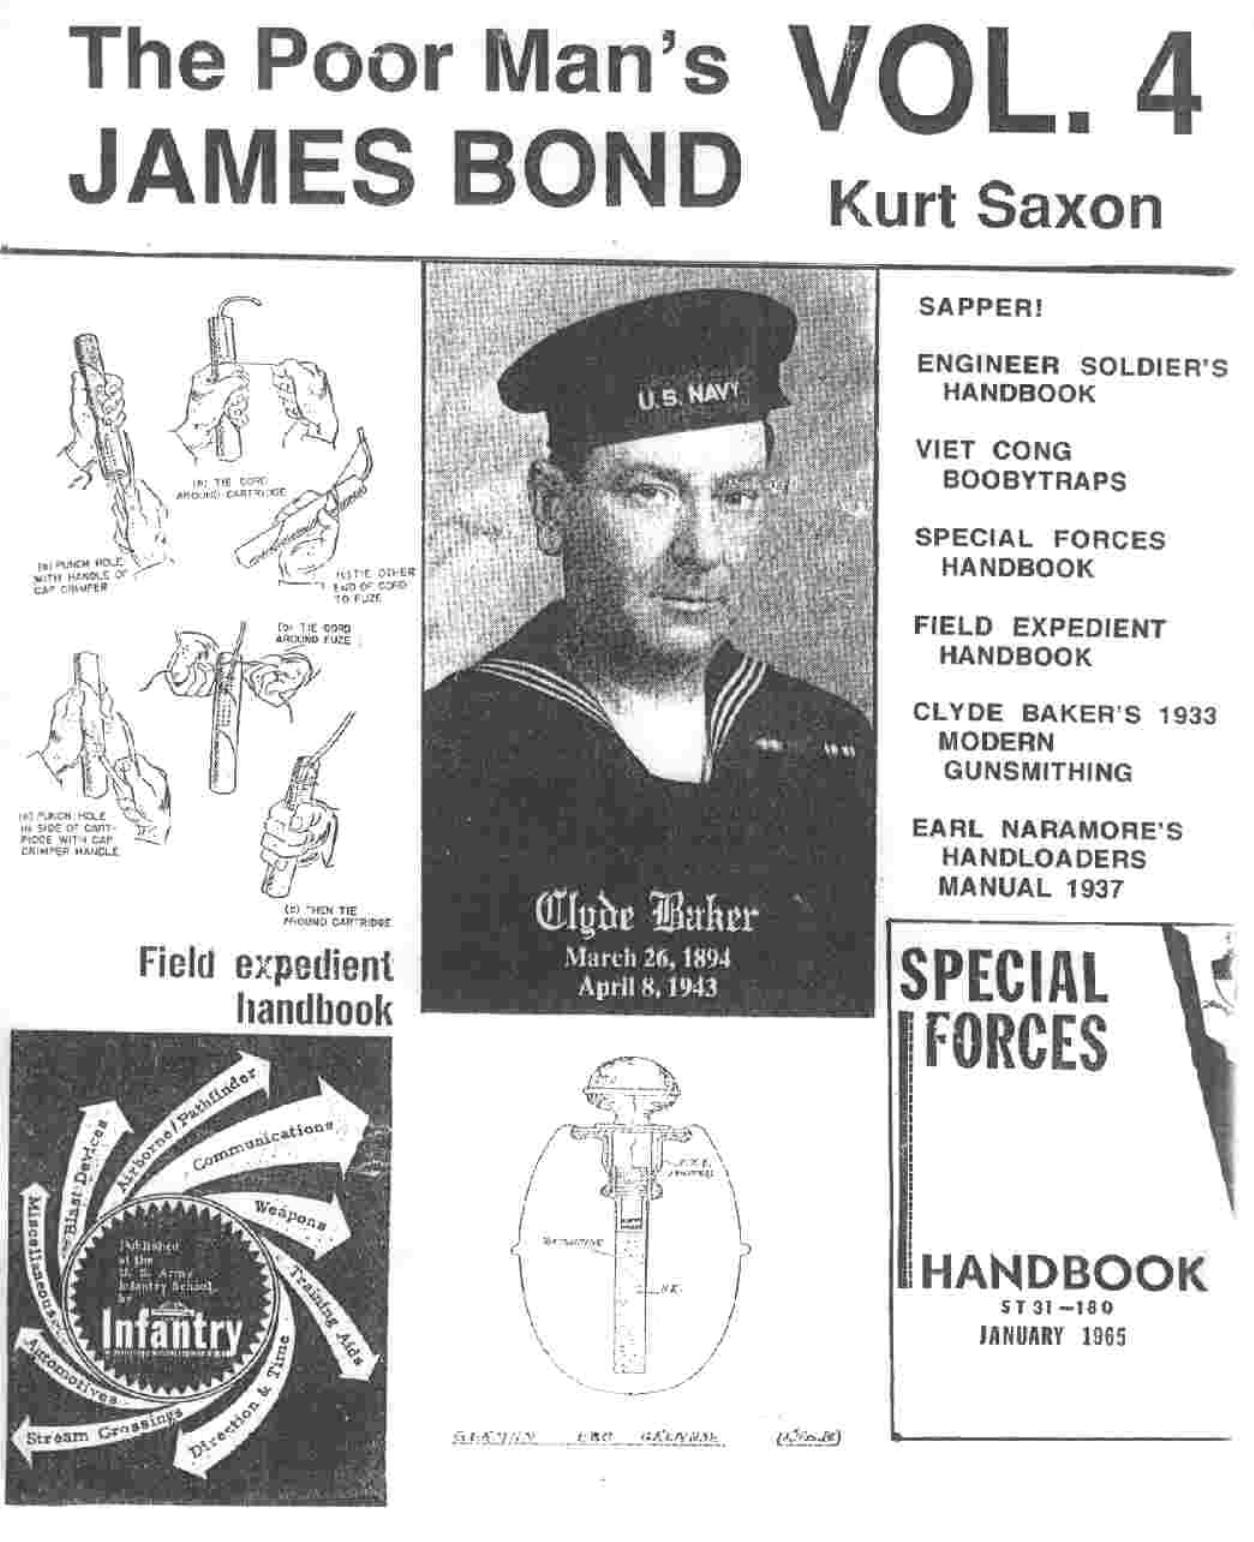 The Poor Man's James Bond Volume 4 by Kurt Saxon